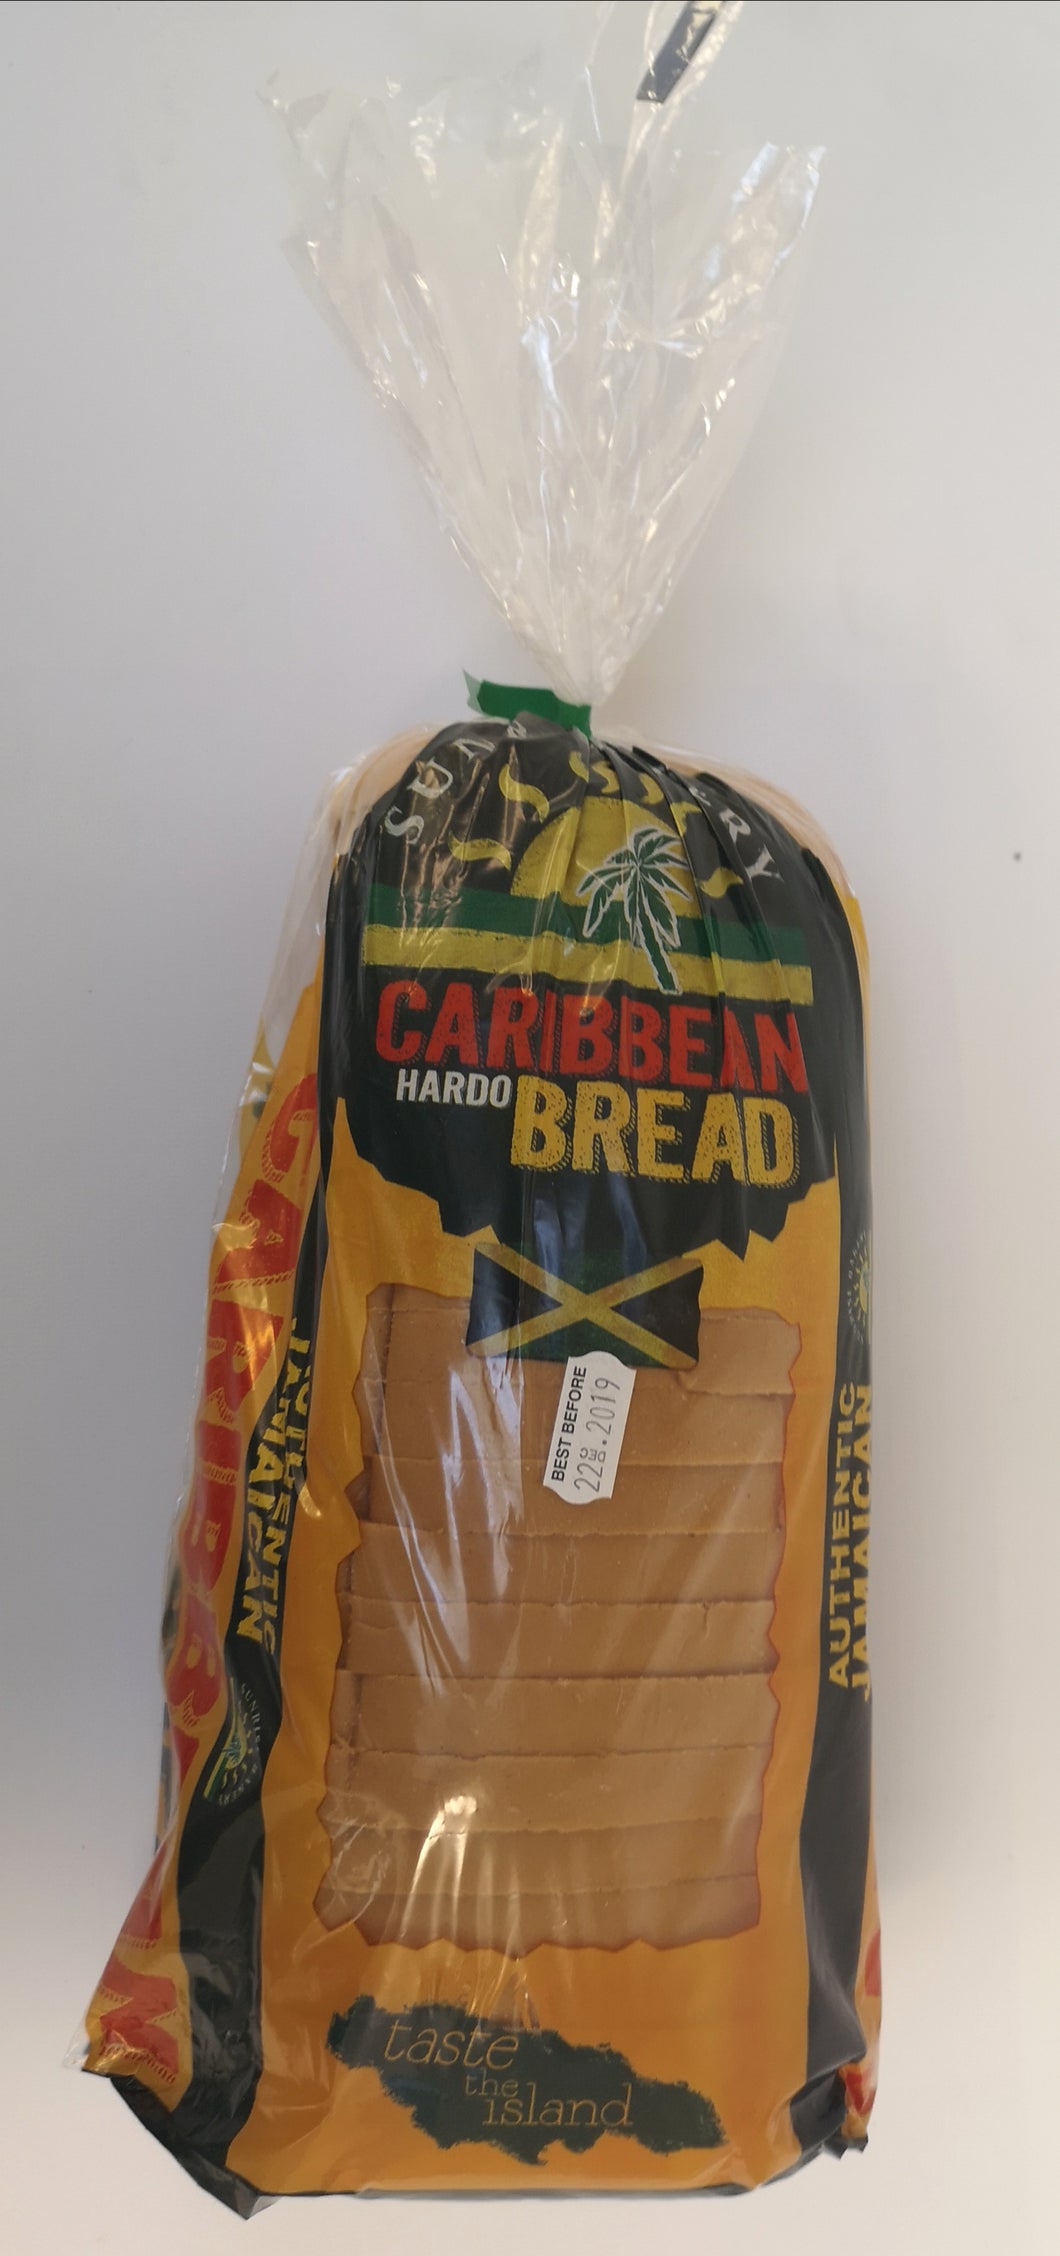 Sunrise Bakery Caribbean Hardo Bread